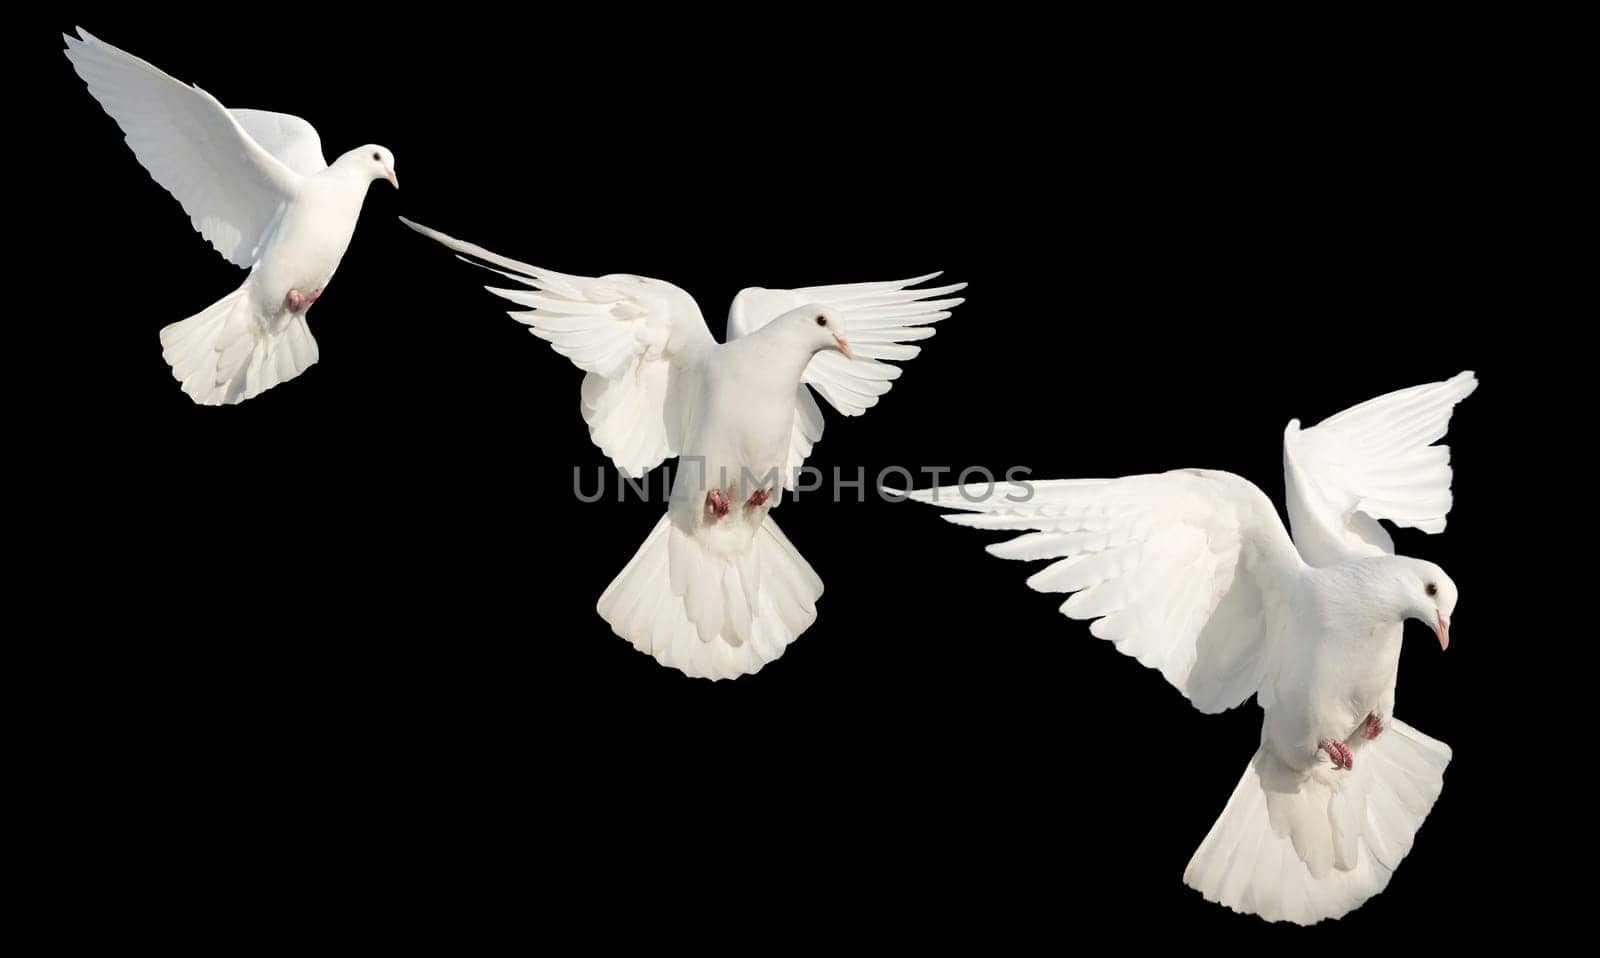 Islam sacred birds , white doves in flight on a black background, religion, faith